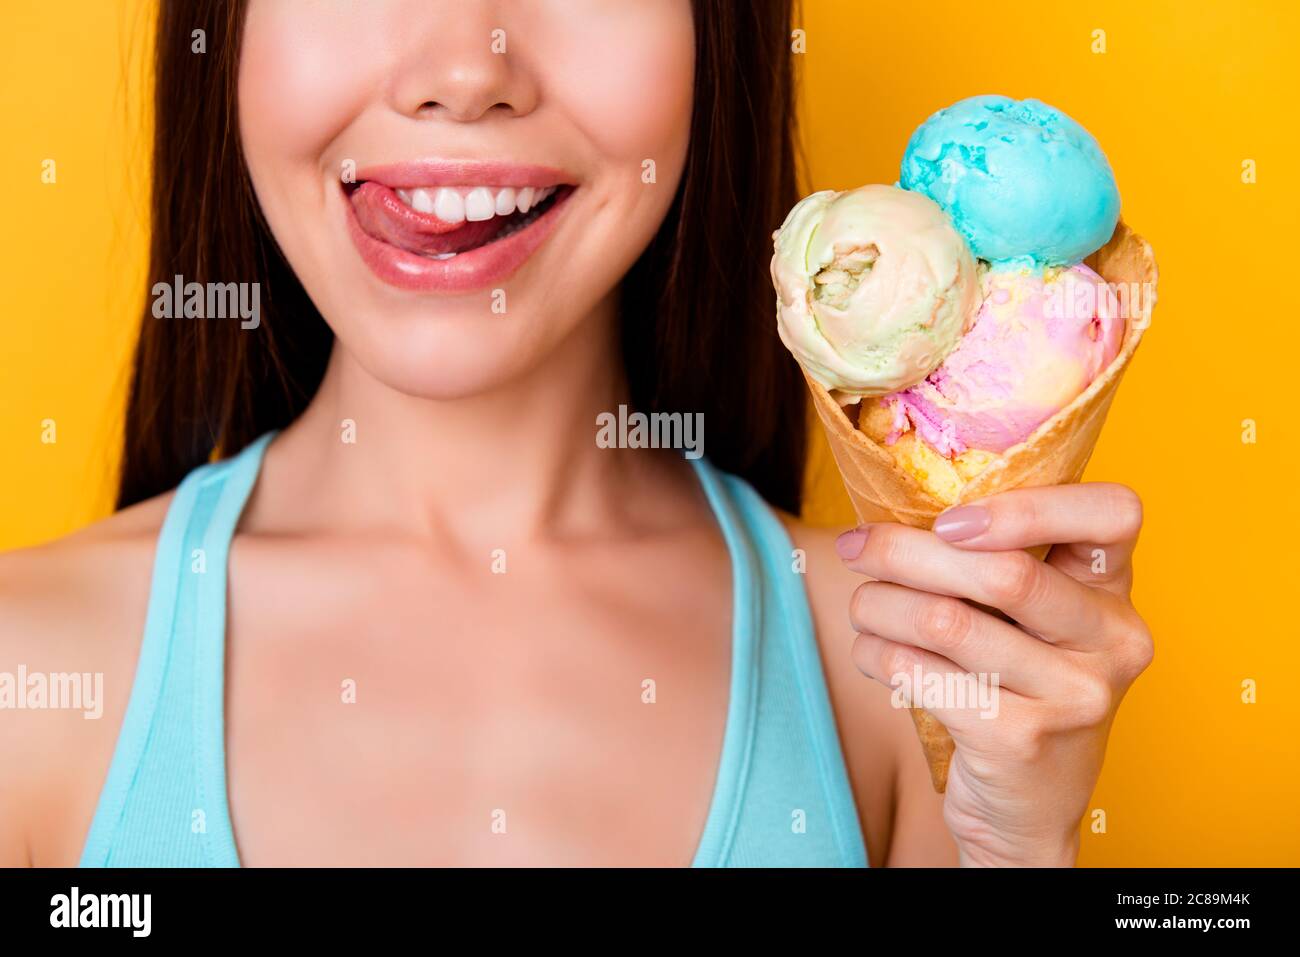 Вкус на девушек. Девушка со вкусом. Мороженое брюнетка. Девушки на разный вкус. Девушка держит мороженое.